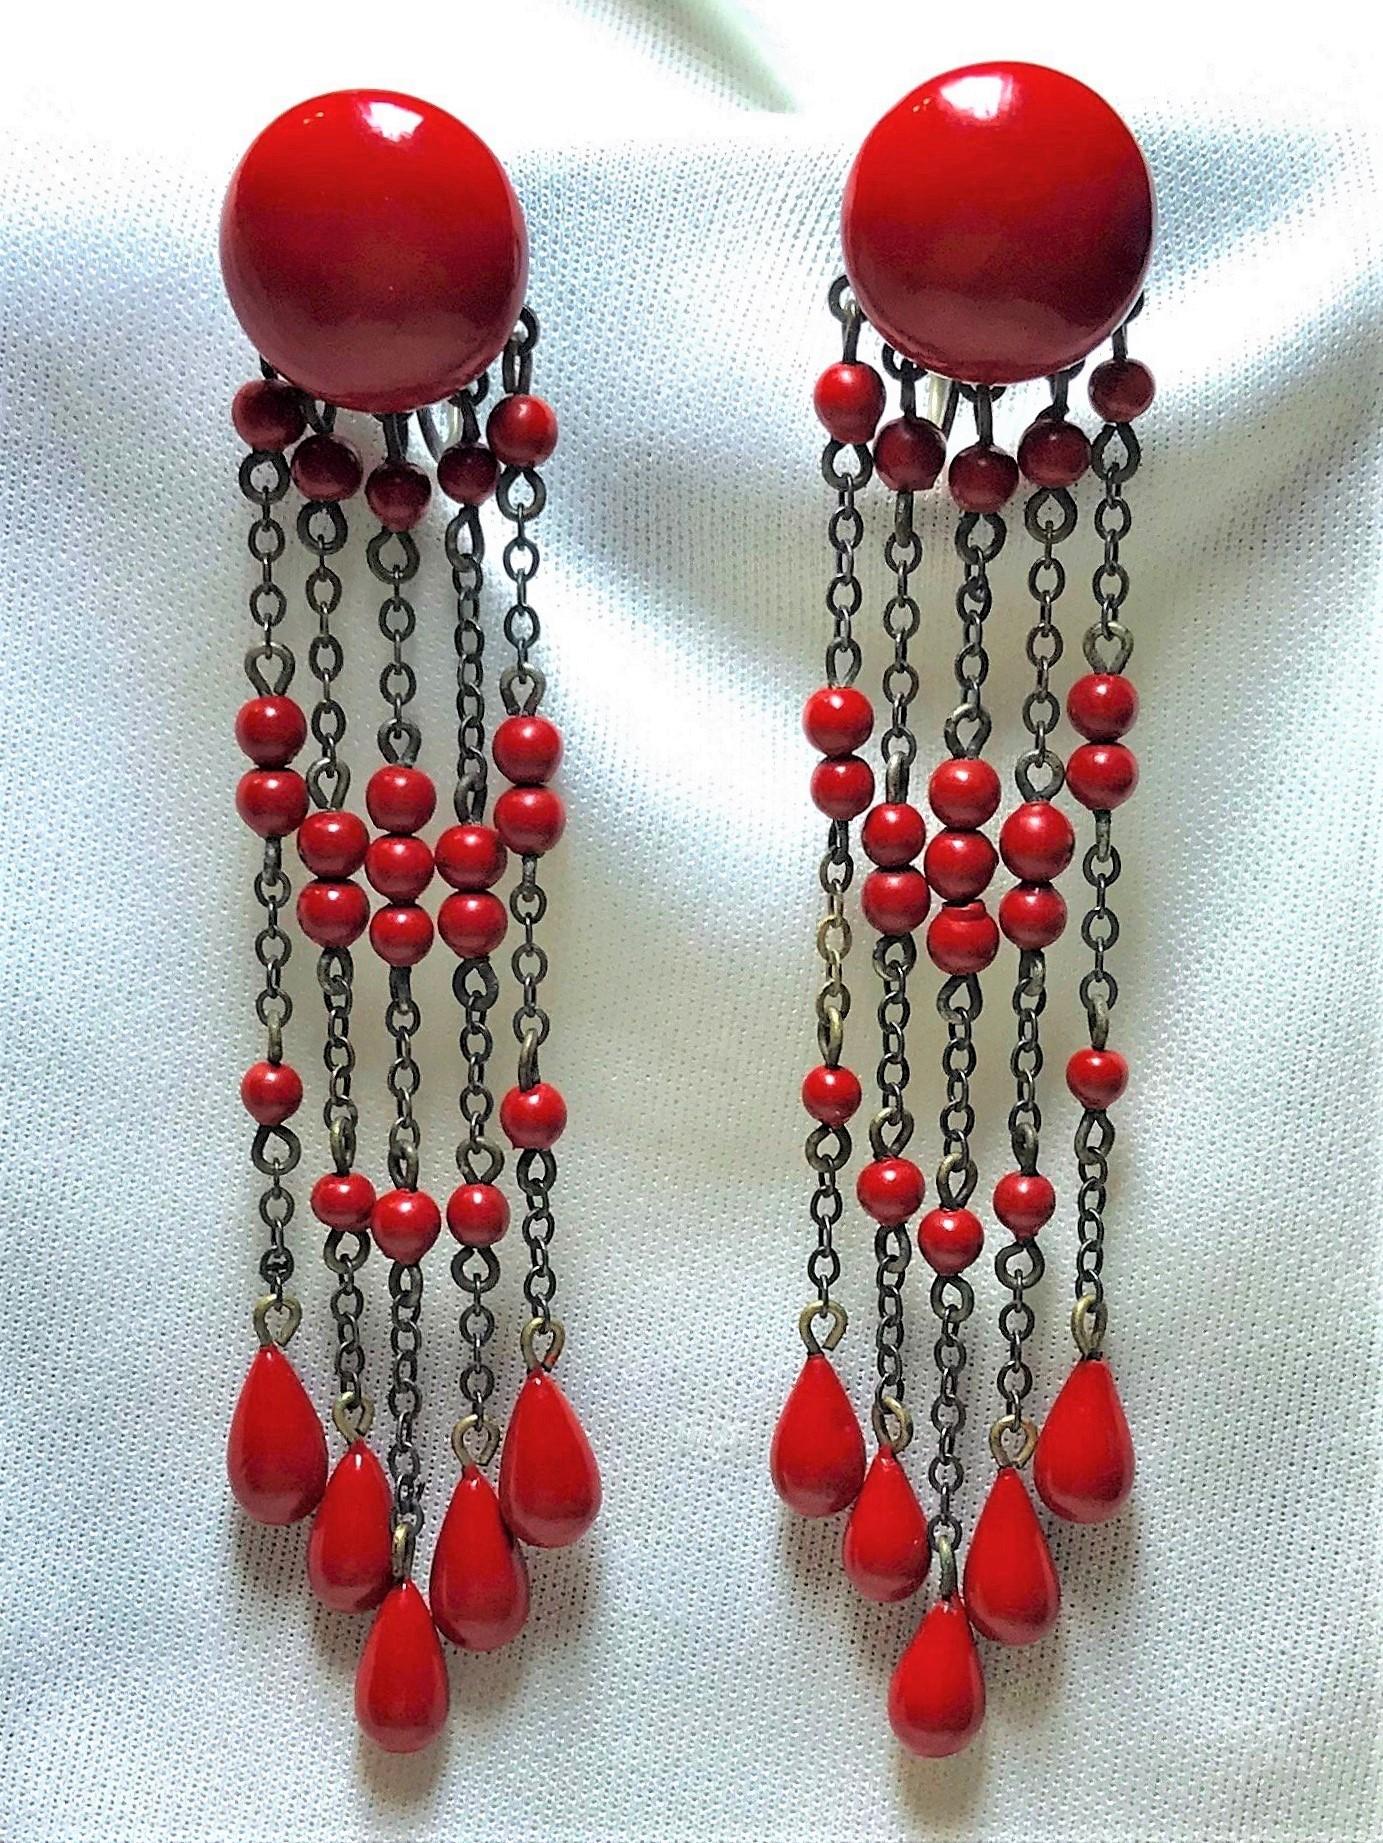 Circa 1920s Deco-Era Red Bead Dangling Earrings  For Sale 2